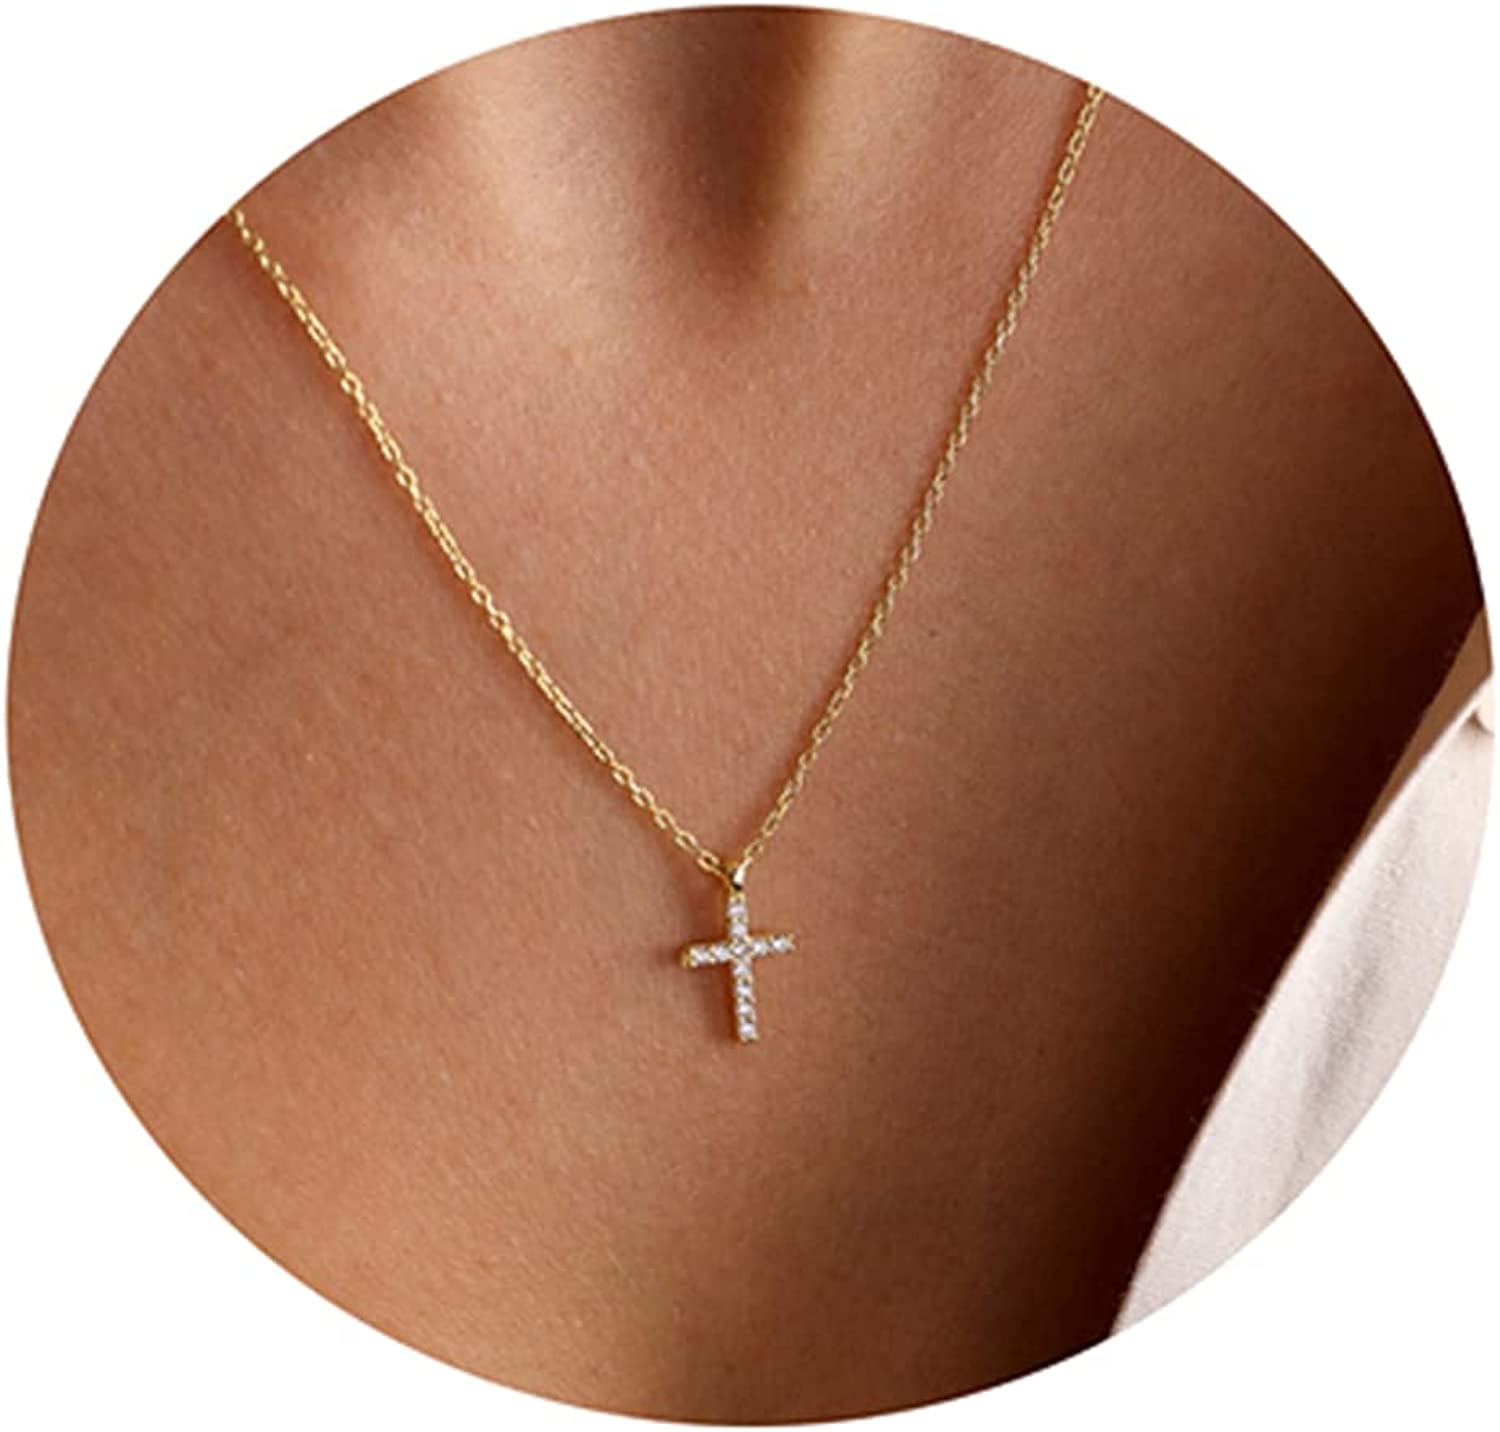 Infinity cross necklace for women 14k gold 1/8ct diamond by fehu jewel